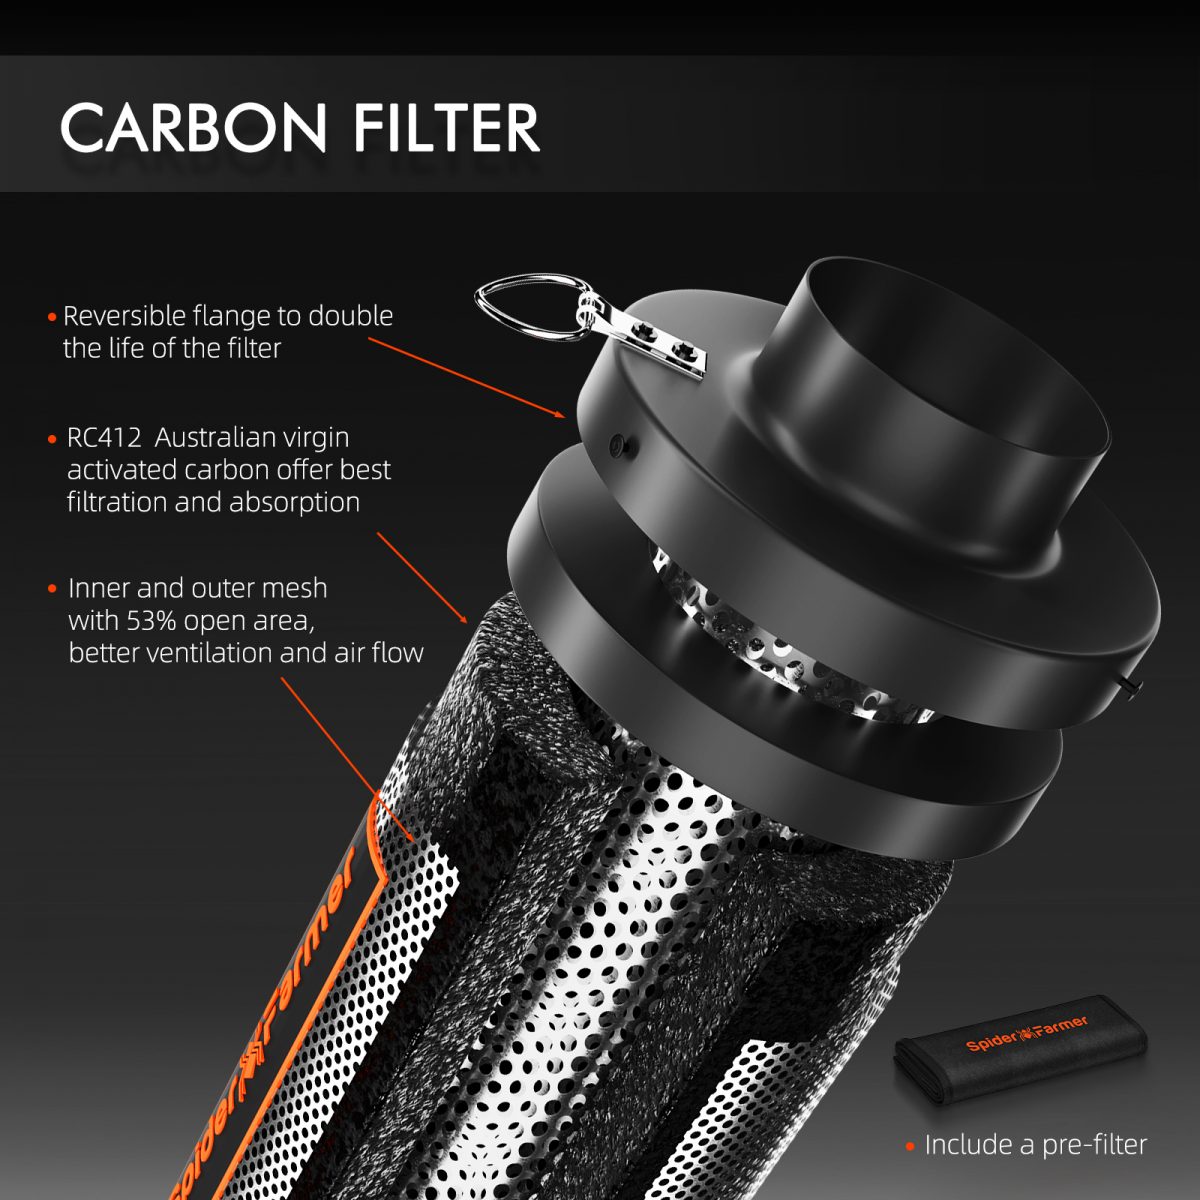 Spider Farmer carbon filter specification for efficient indoor air filtration